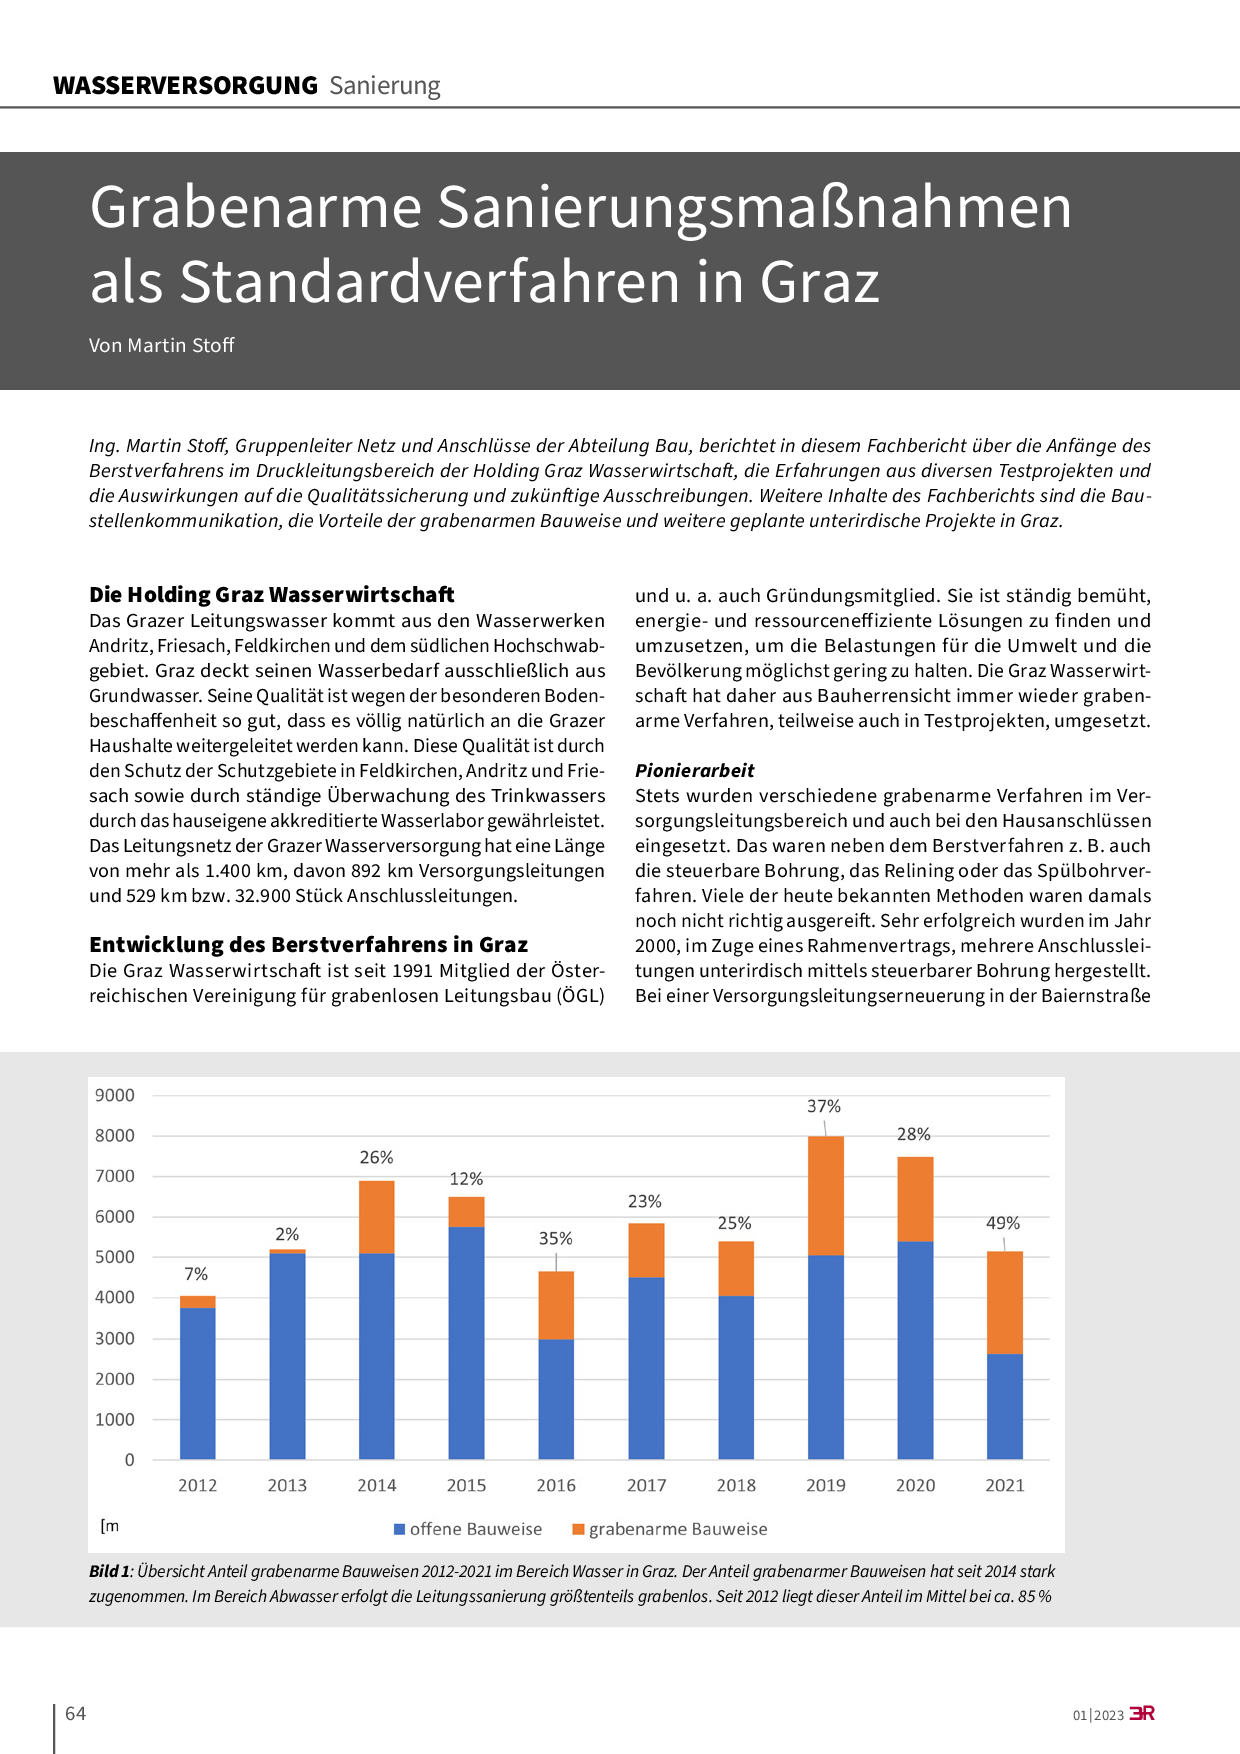 Grabenarme Sanierungsmaßnahmen als Standardverfahren in Graz